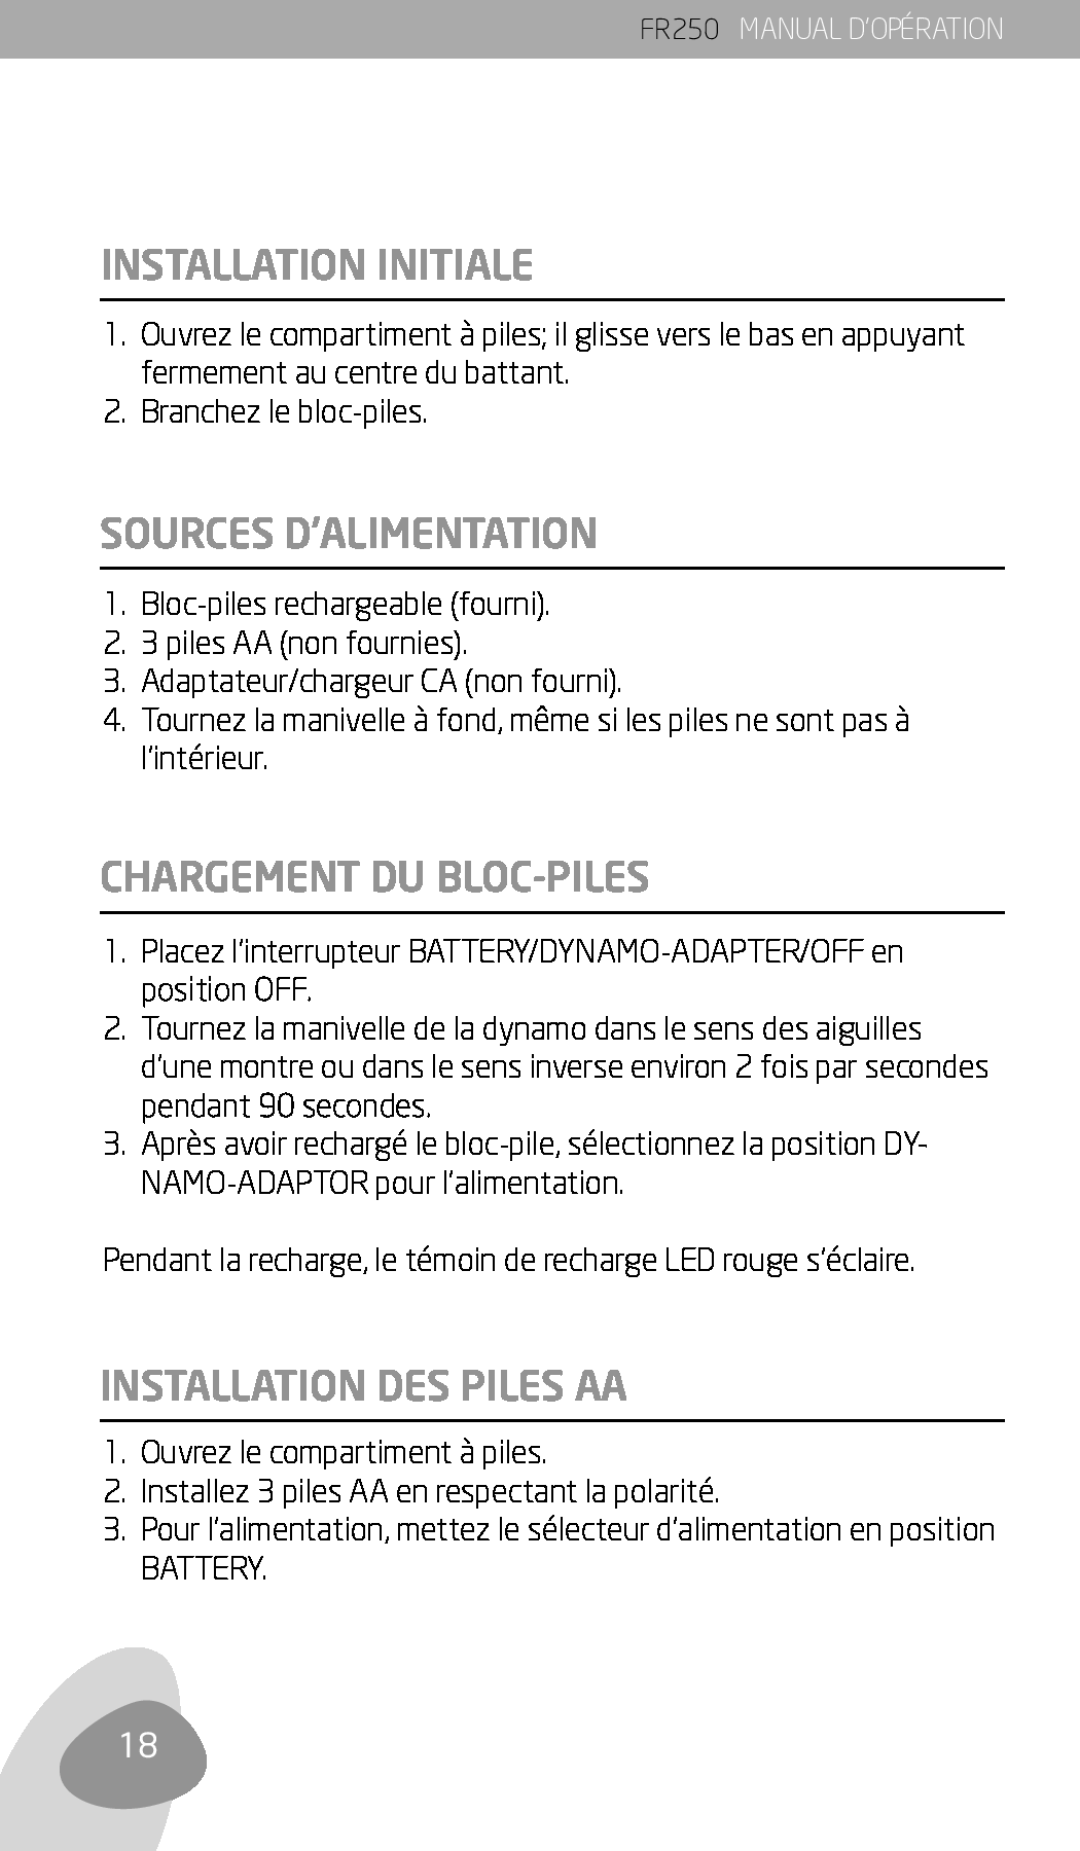 Eton FR250 owner manual Installation Initiale, Sources D’Alimentation, Chargement Du Bloc-Piles, Installation Des Piles Aa 